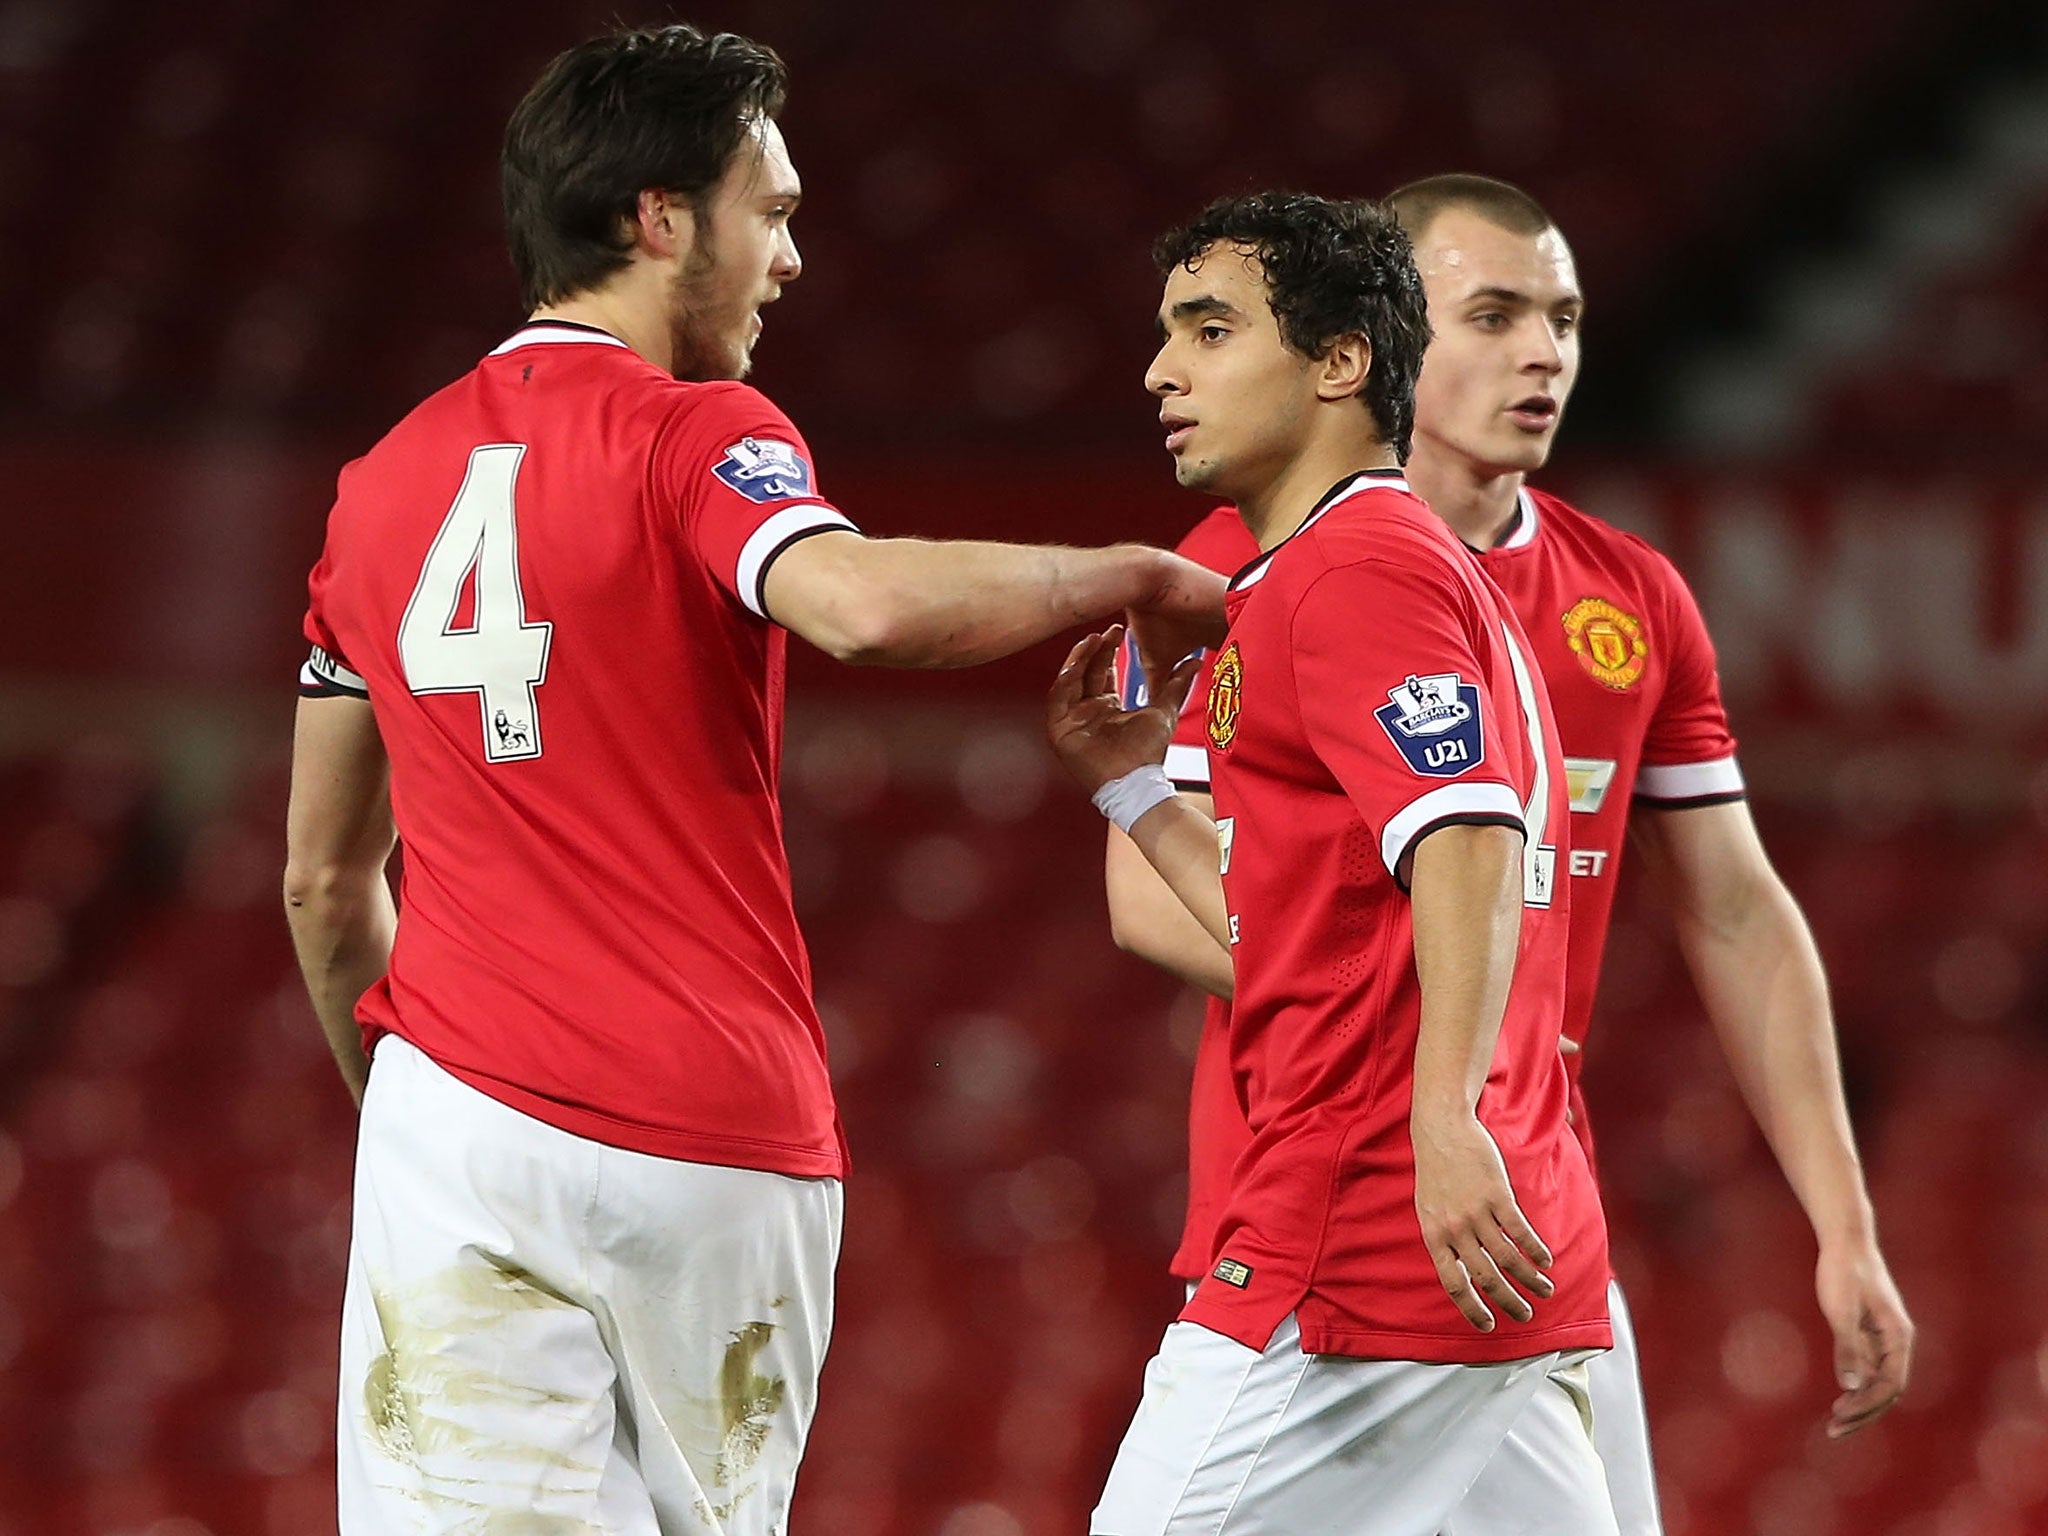 Rafael (centre) celebrates his goal for the Under-21s